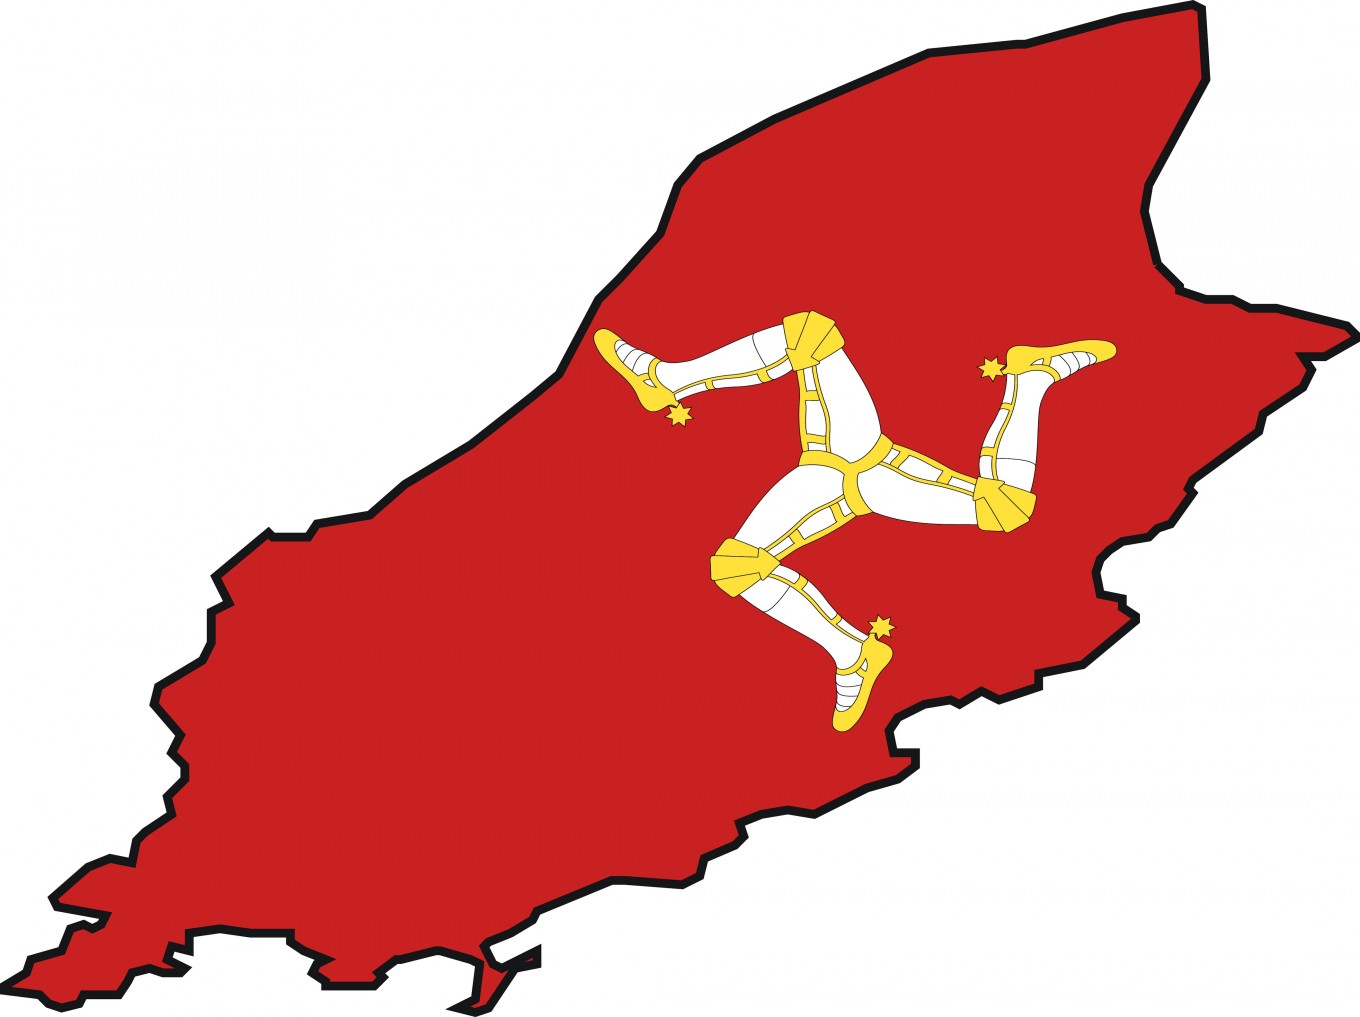 Cap Kaki Tiga brand pulled for resembling Isle of Man logo 